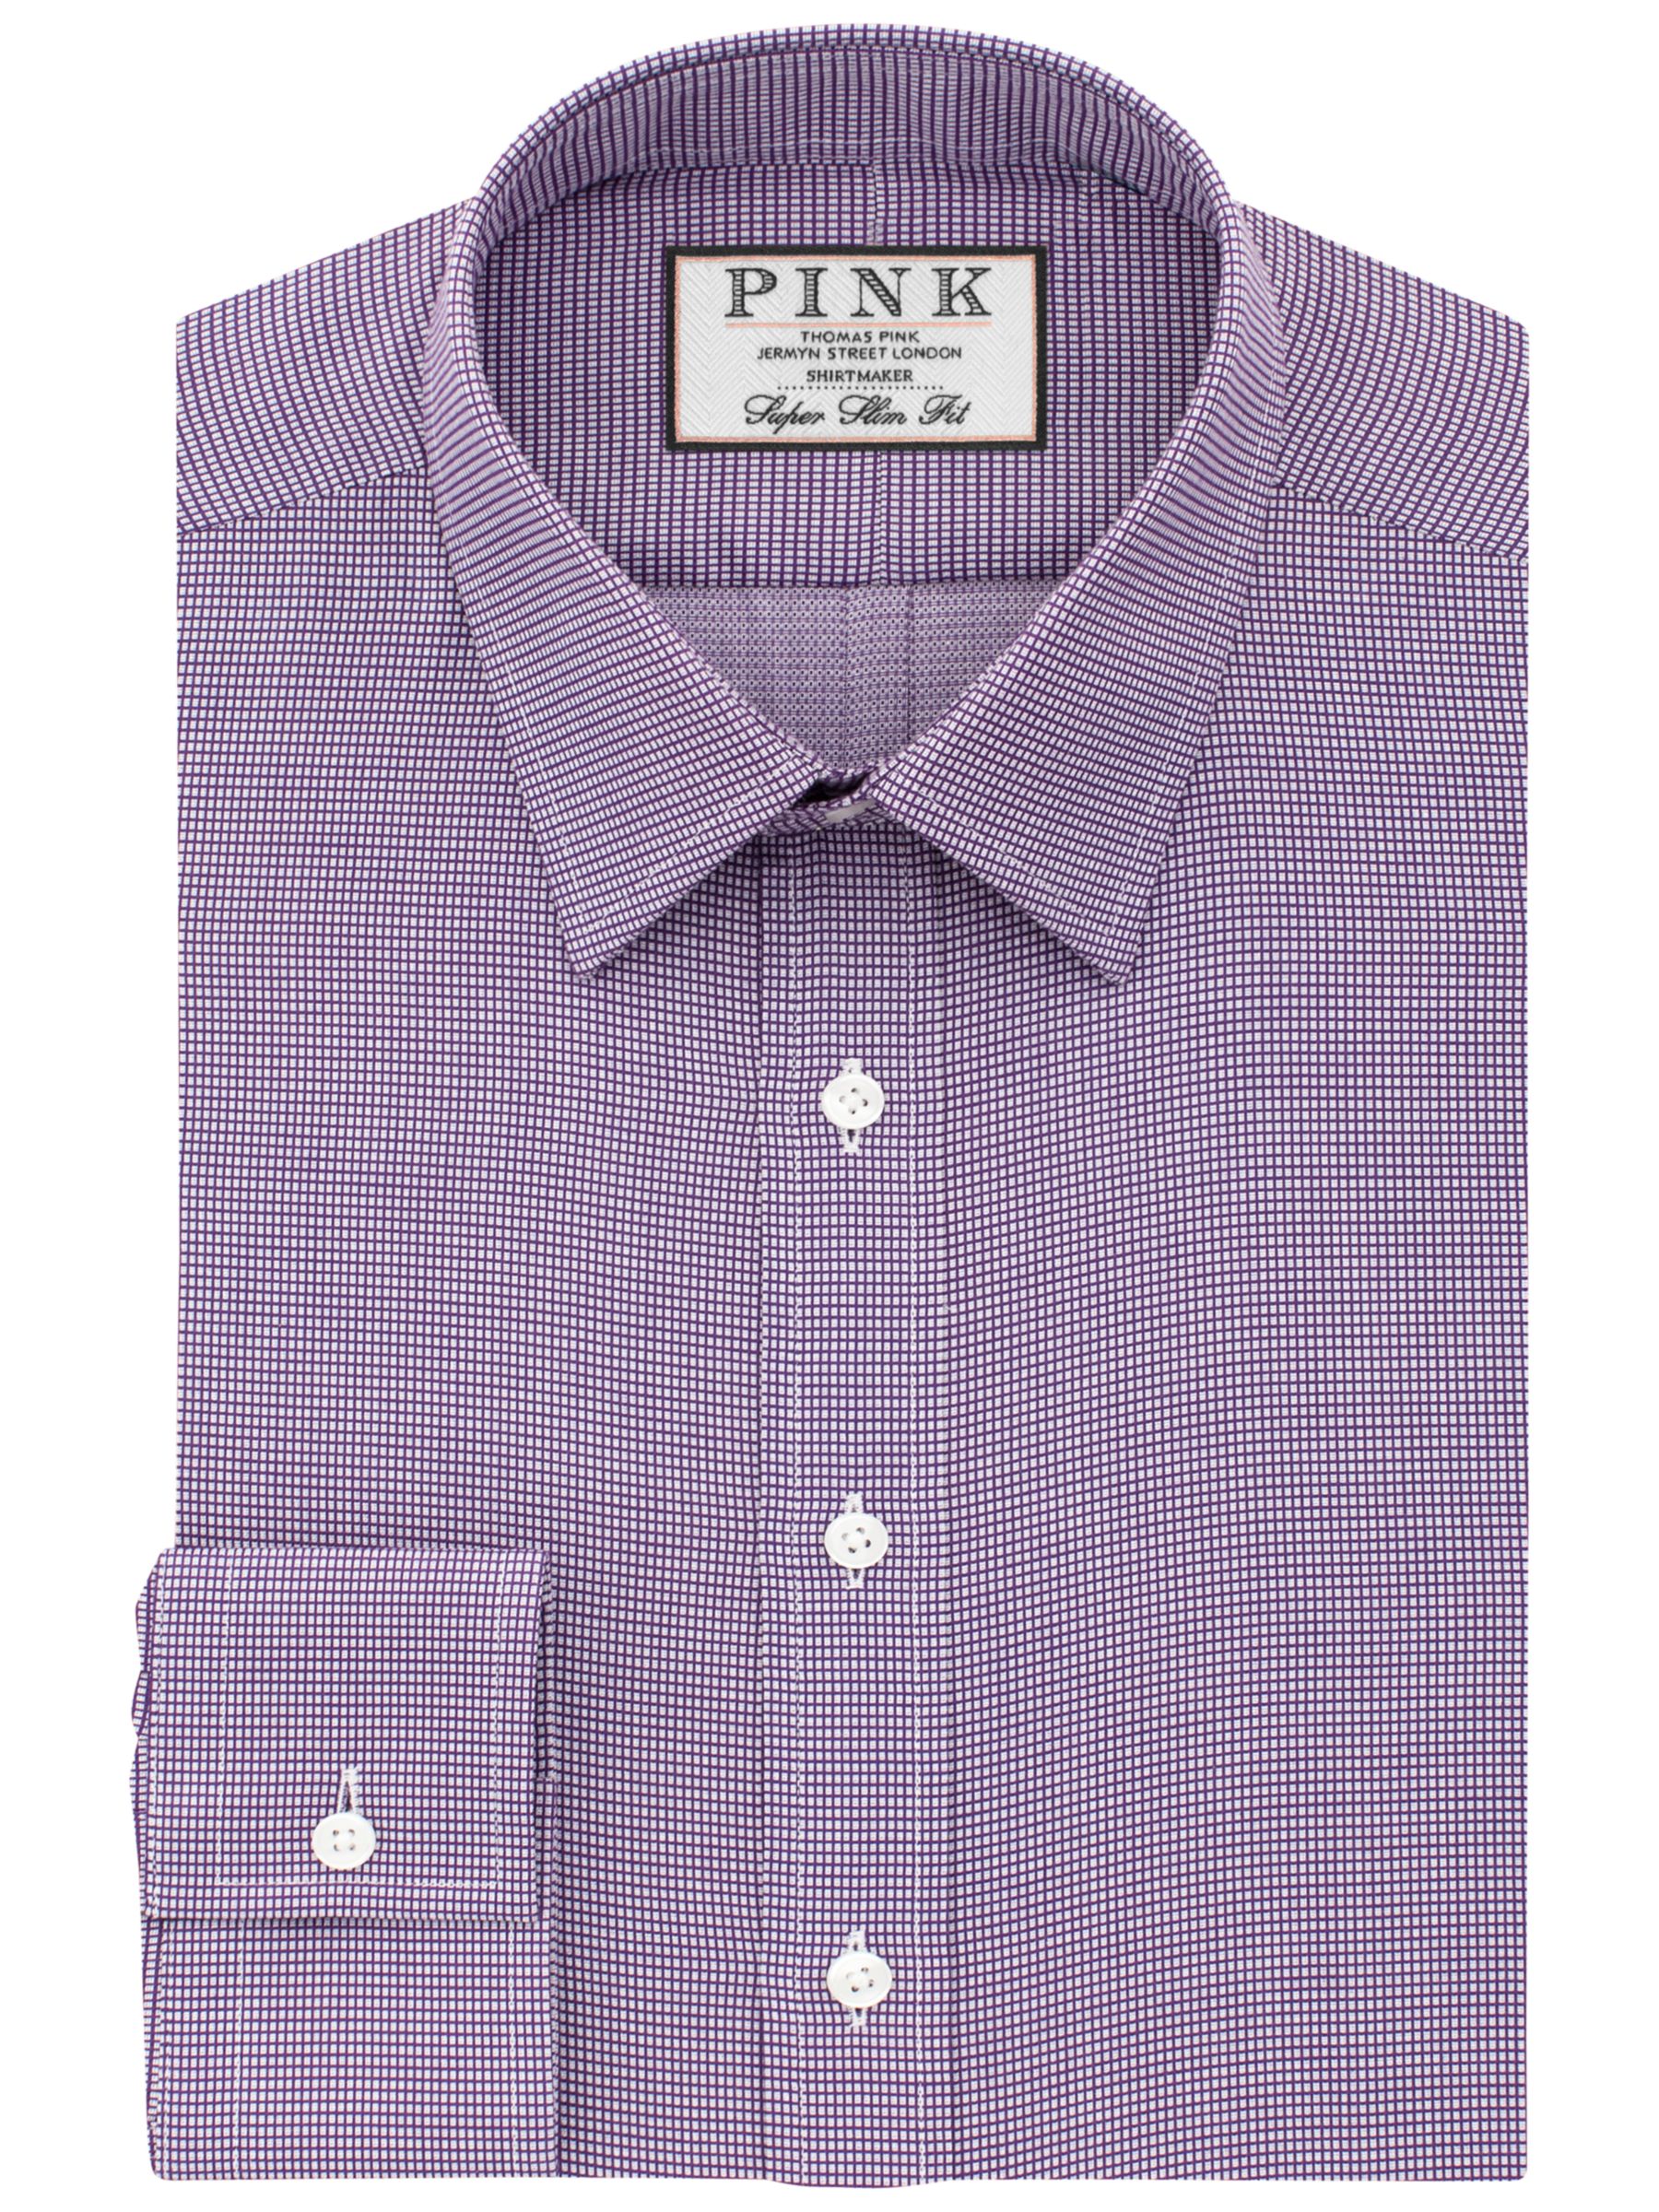 Thomas Pink Hartley Textured Super Slim Fit Shirt, Purple/White, 15